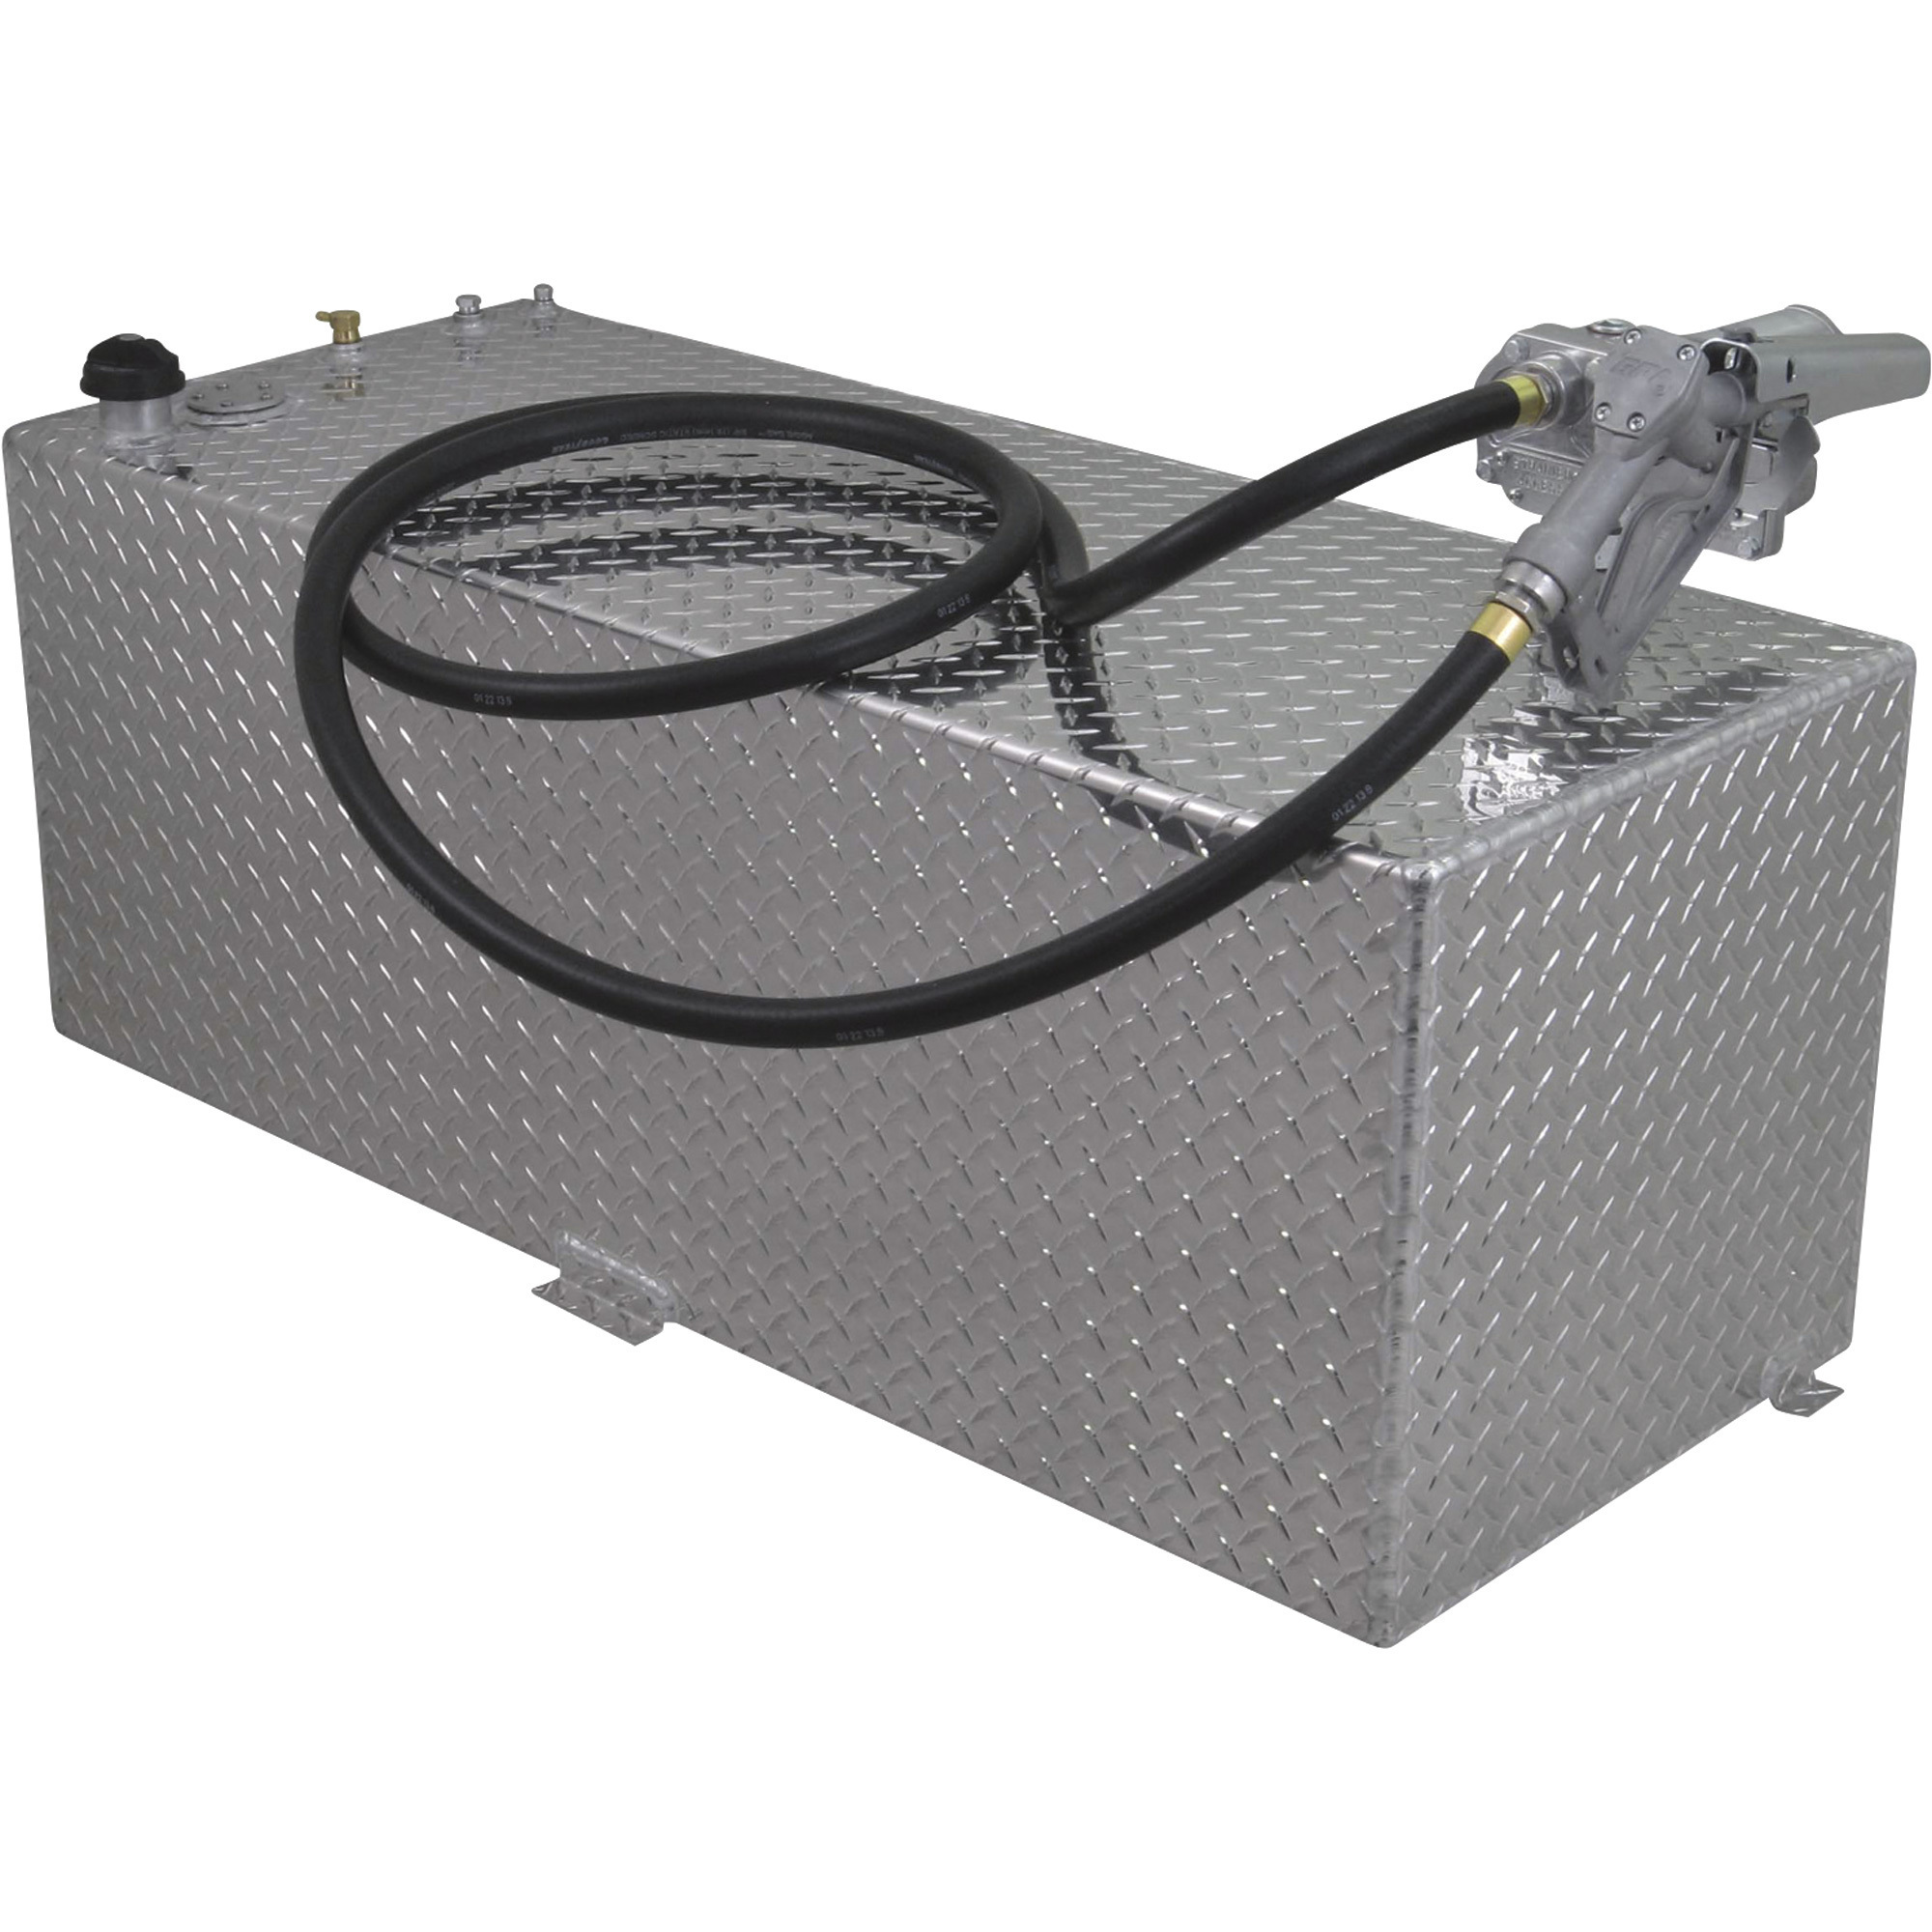 RDS Aluminum Transfer Fuel Tank with GPI 12V Fuel Transfer Pump, 80-Gallon, Rectangular, Diamond Plate, 15 GPM, Model 73962